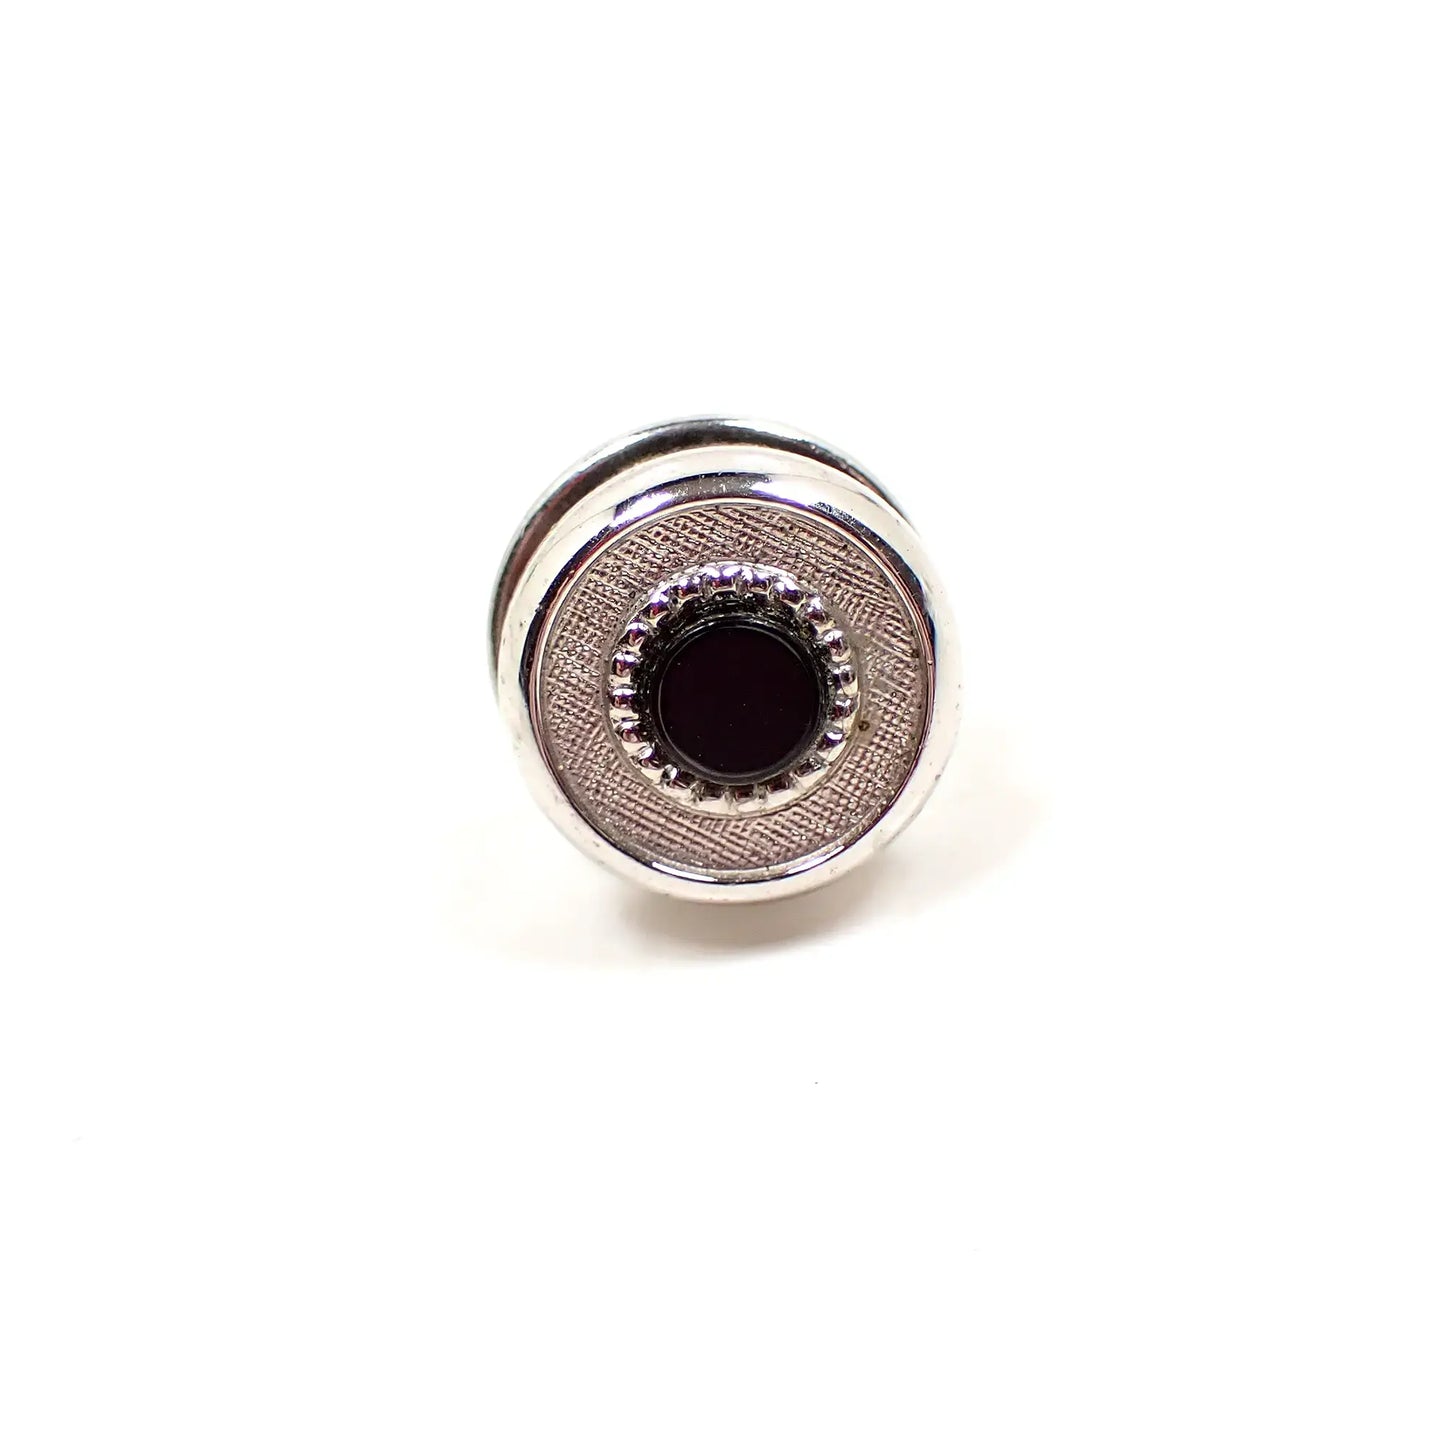 Small Round Mid Century Vintage Tie Tack Pin with Black Plastic Cab